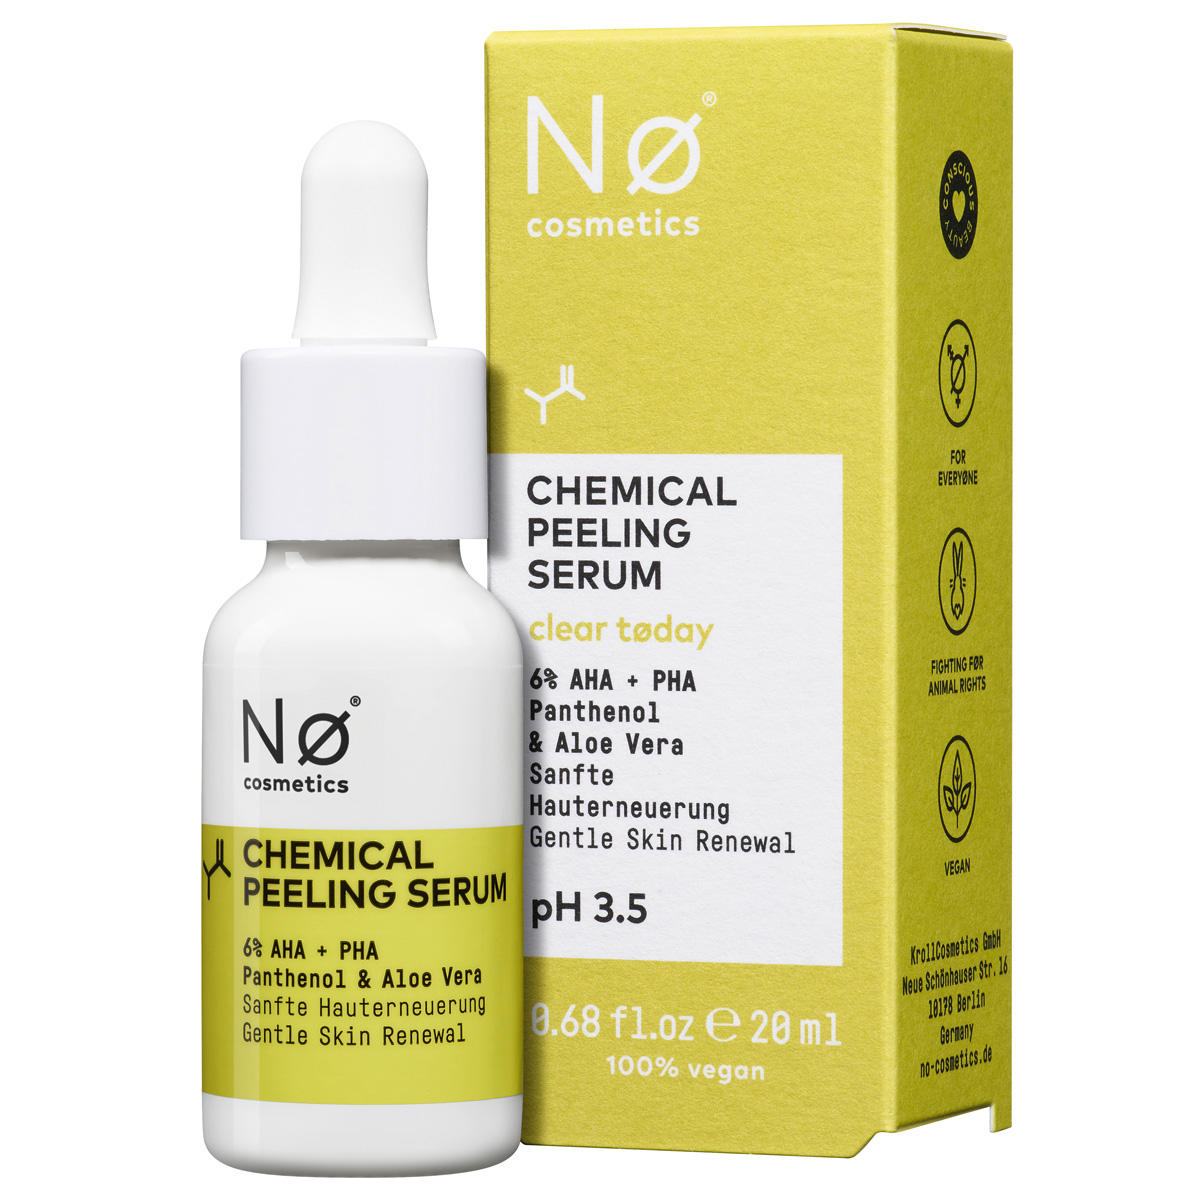 Nø Cosmetics clear tøday Chemical Peeling Serum 20 ml - 1